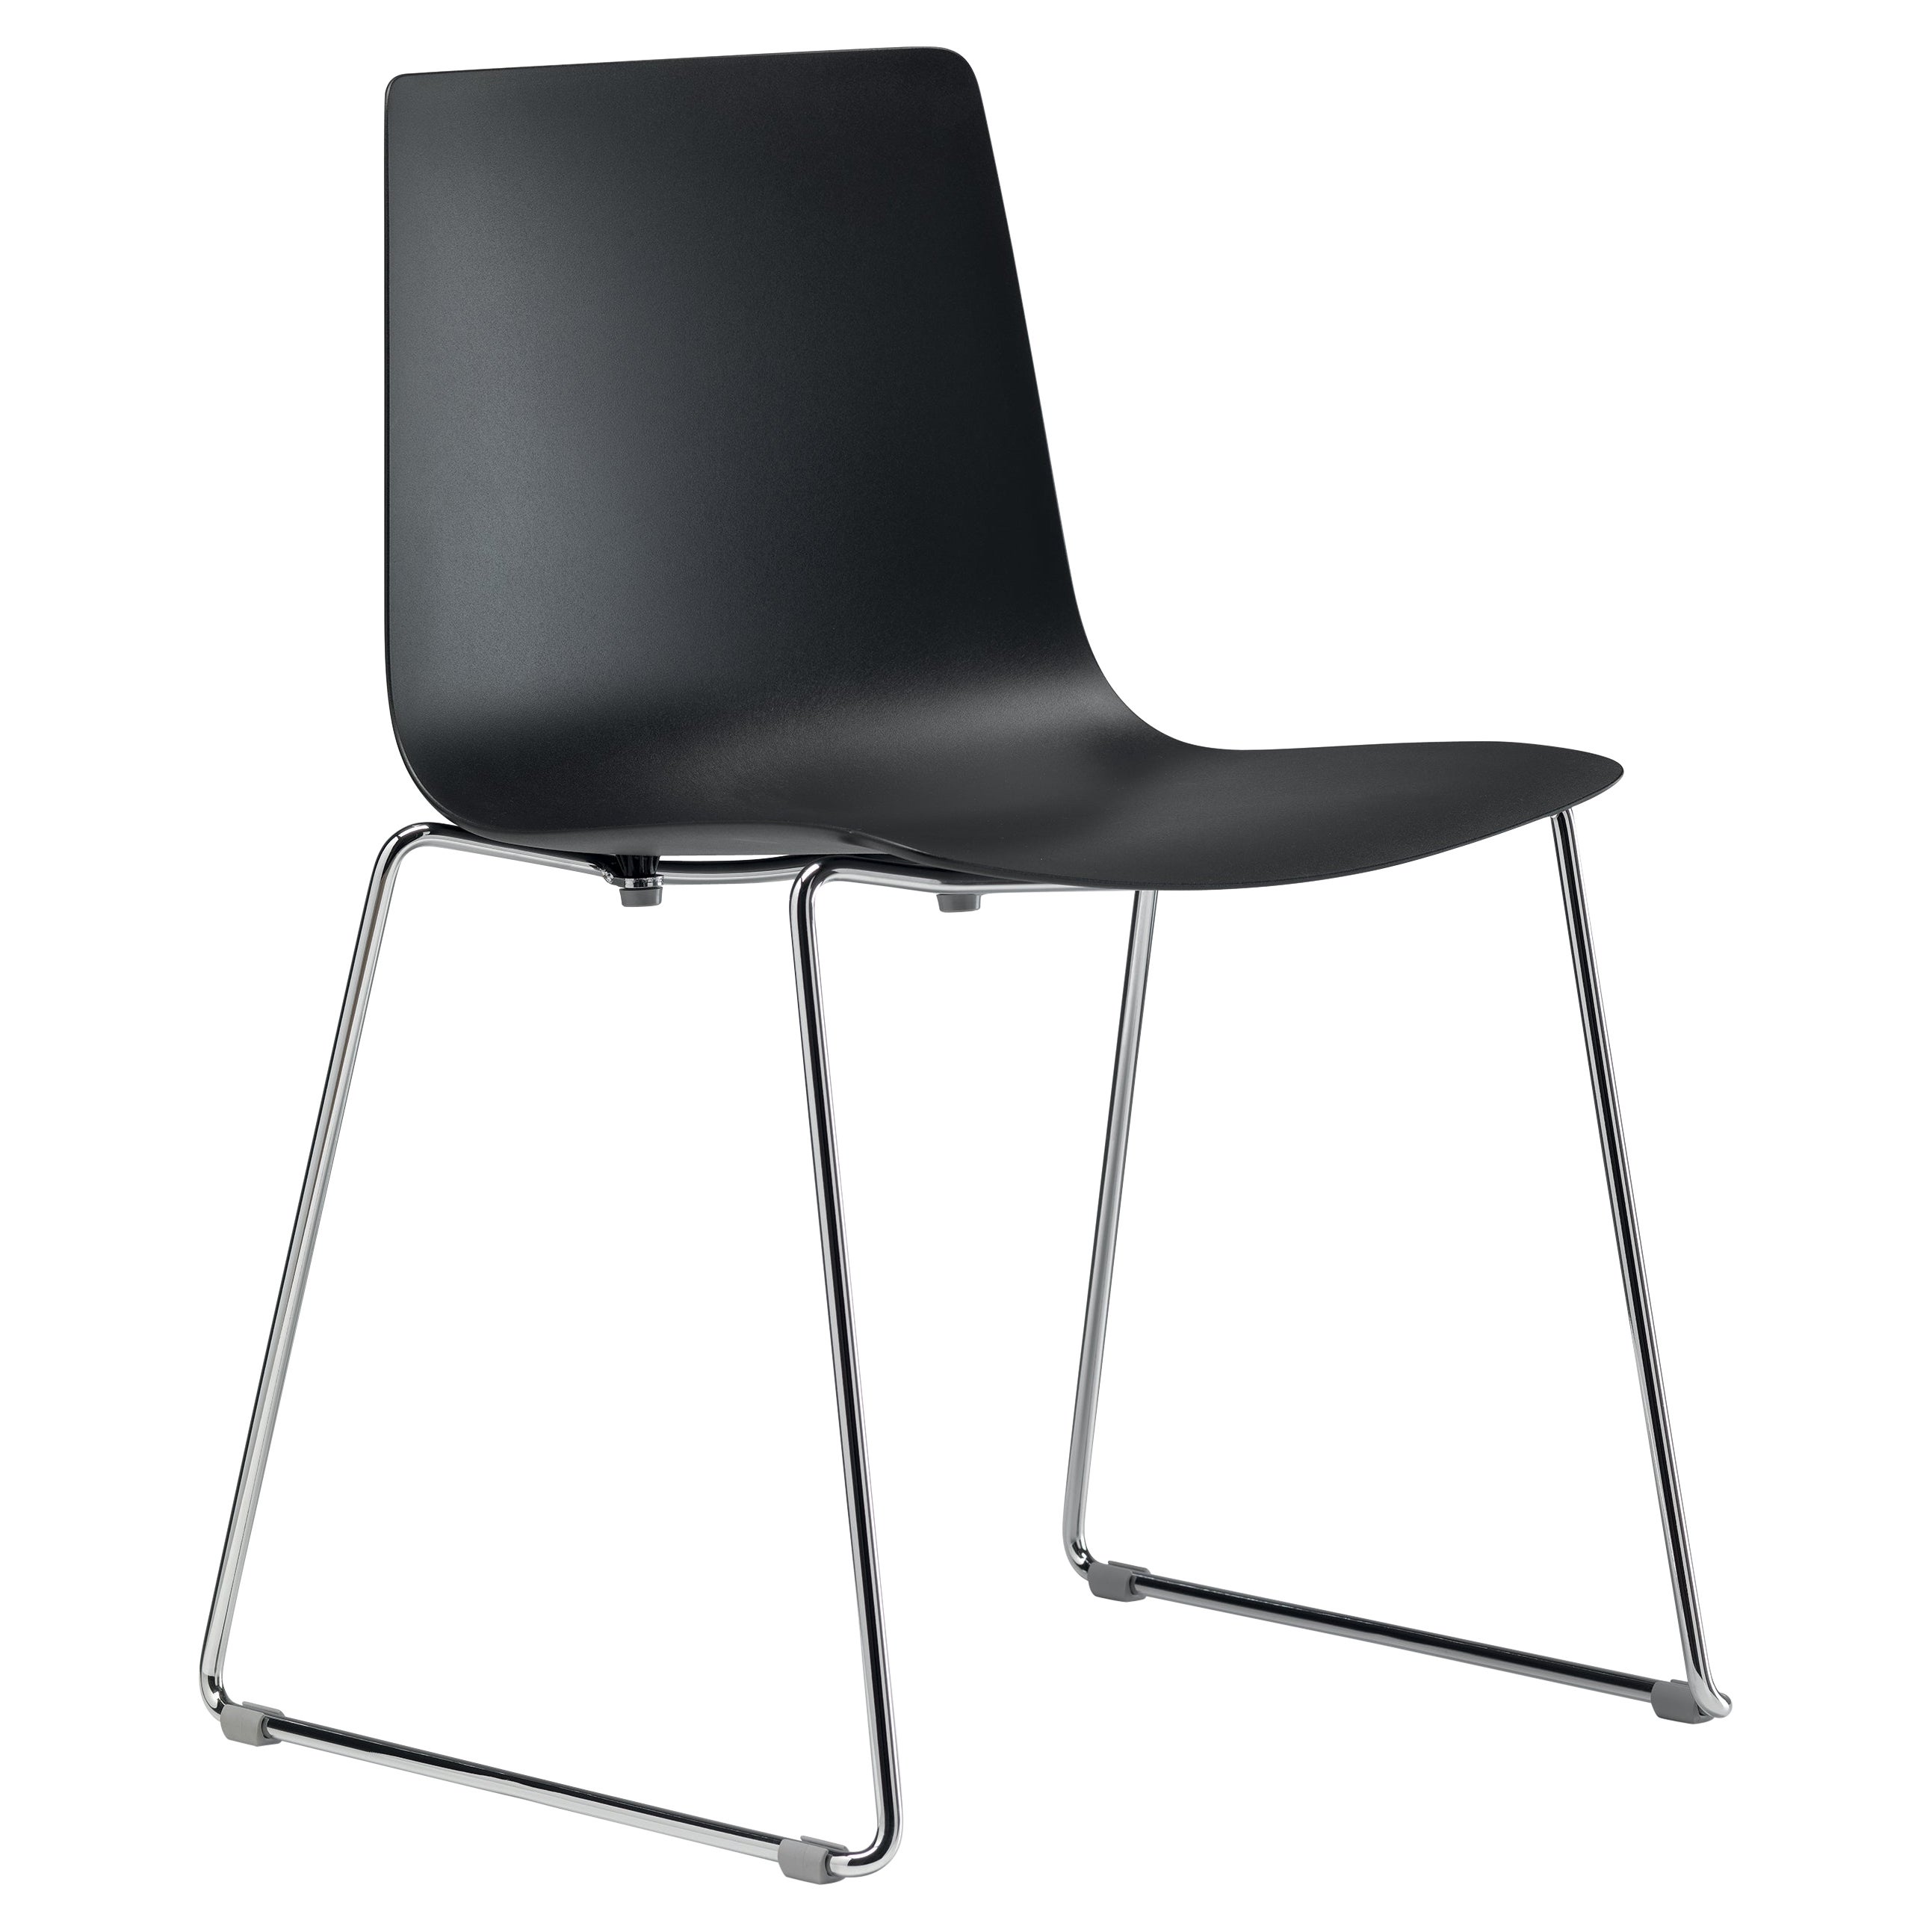 Alias 89A Slim Sledge Chair in Black Polypropylene Seat and Chromed Steel Frame